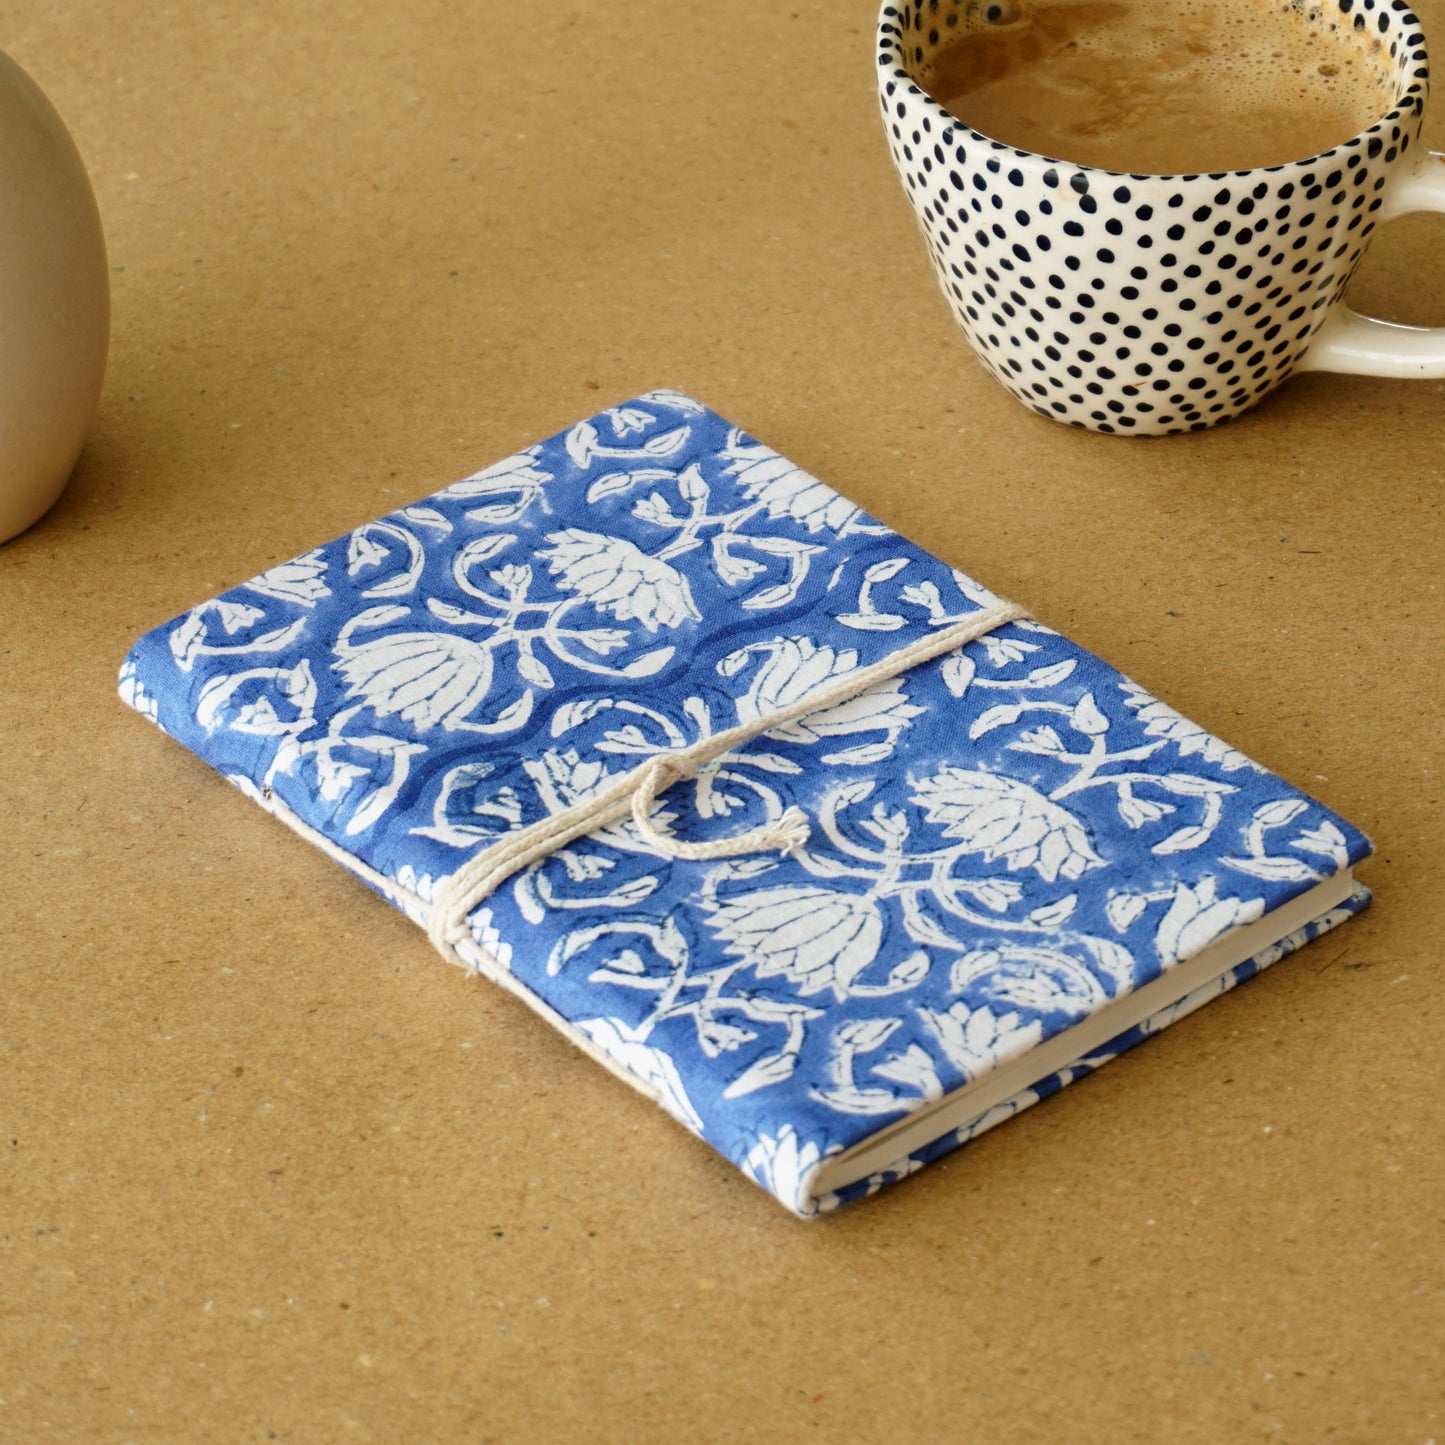 Handmade Upcycled Fabric Diary | Blue Flowers